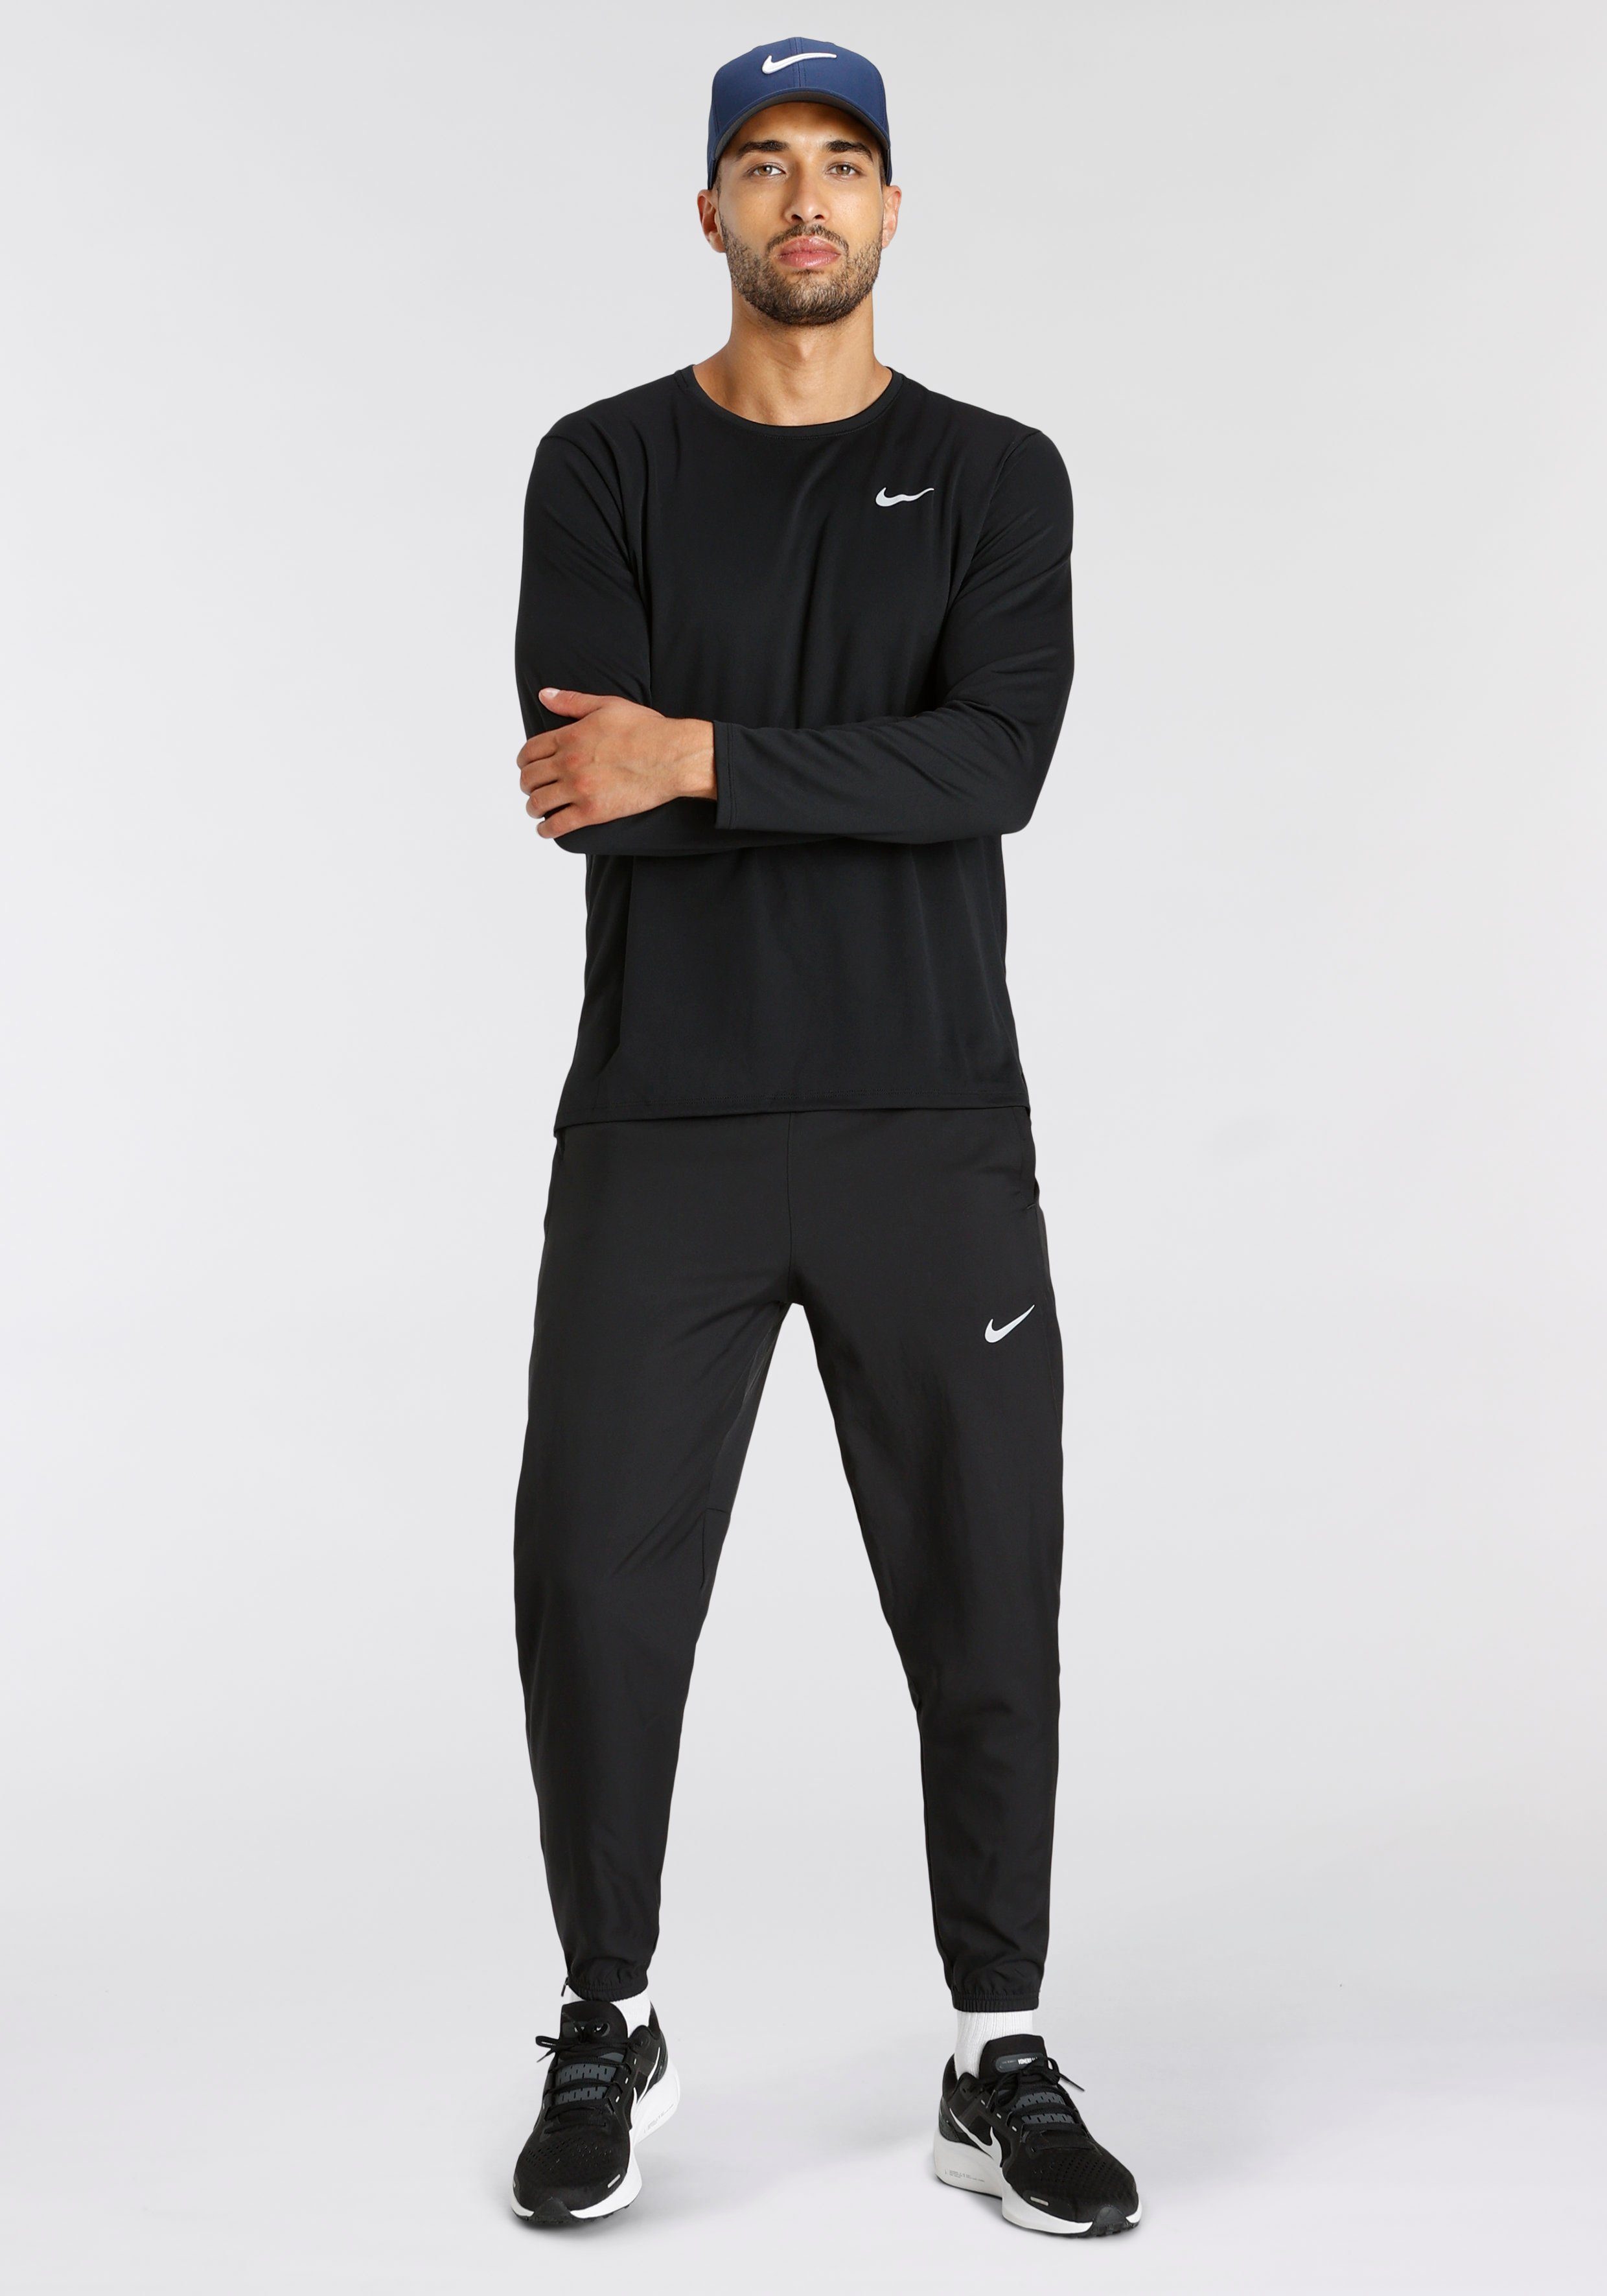 Nike | OTTO Nike Mode Sportliche » kaufen Sportbekleidung